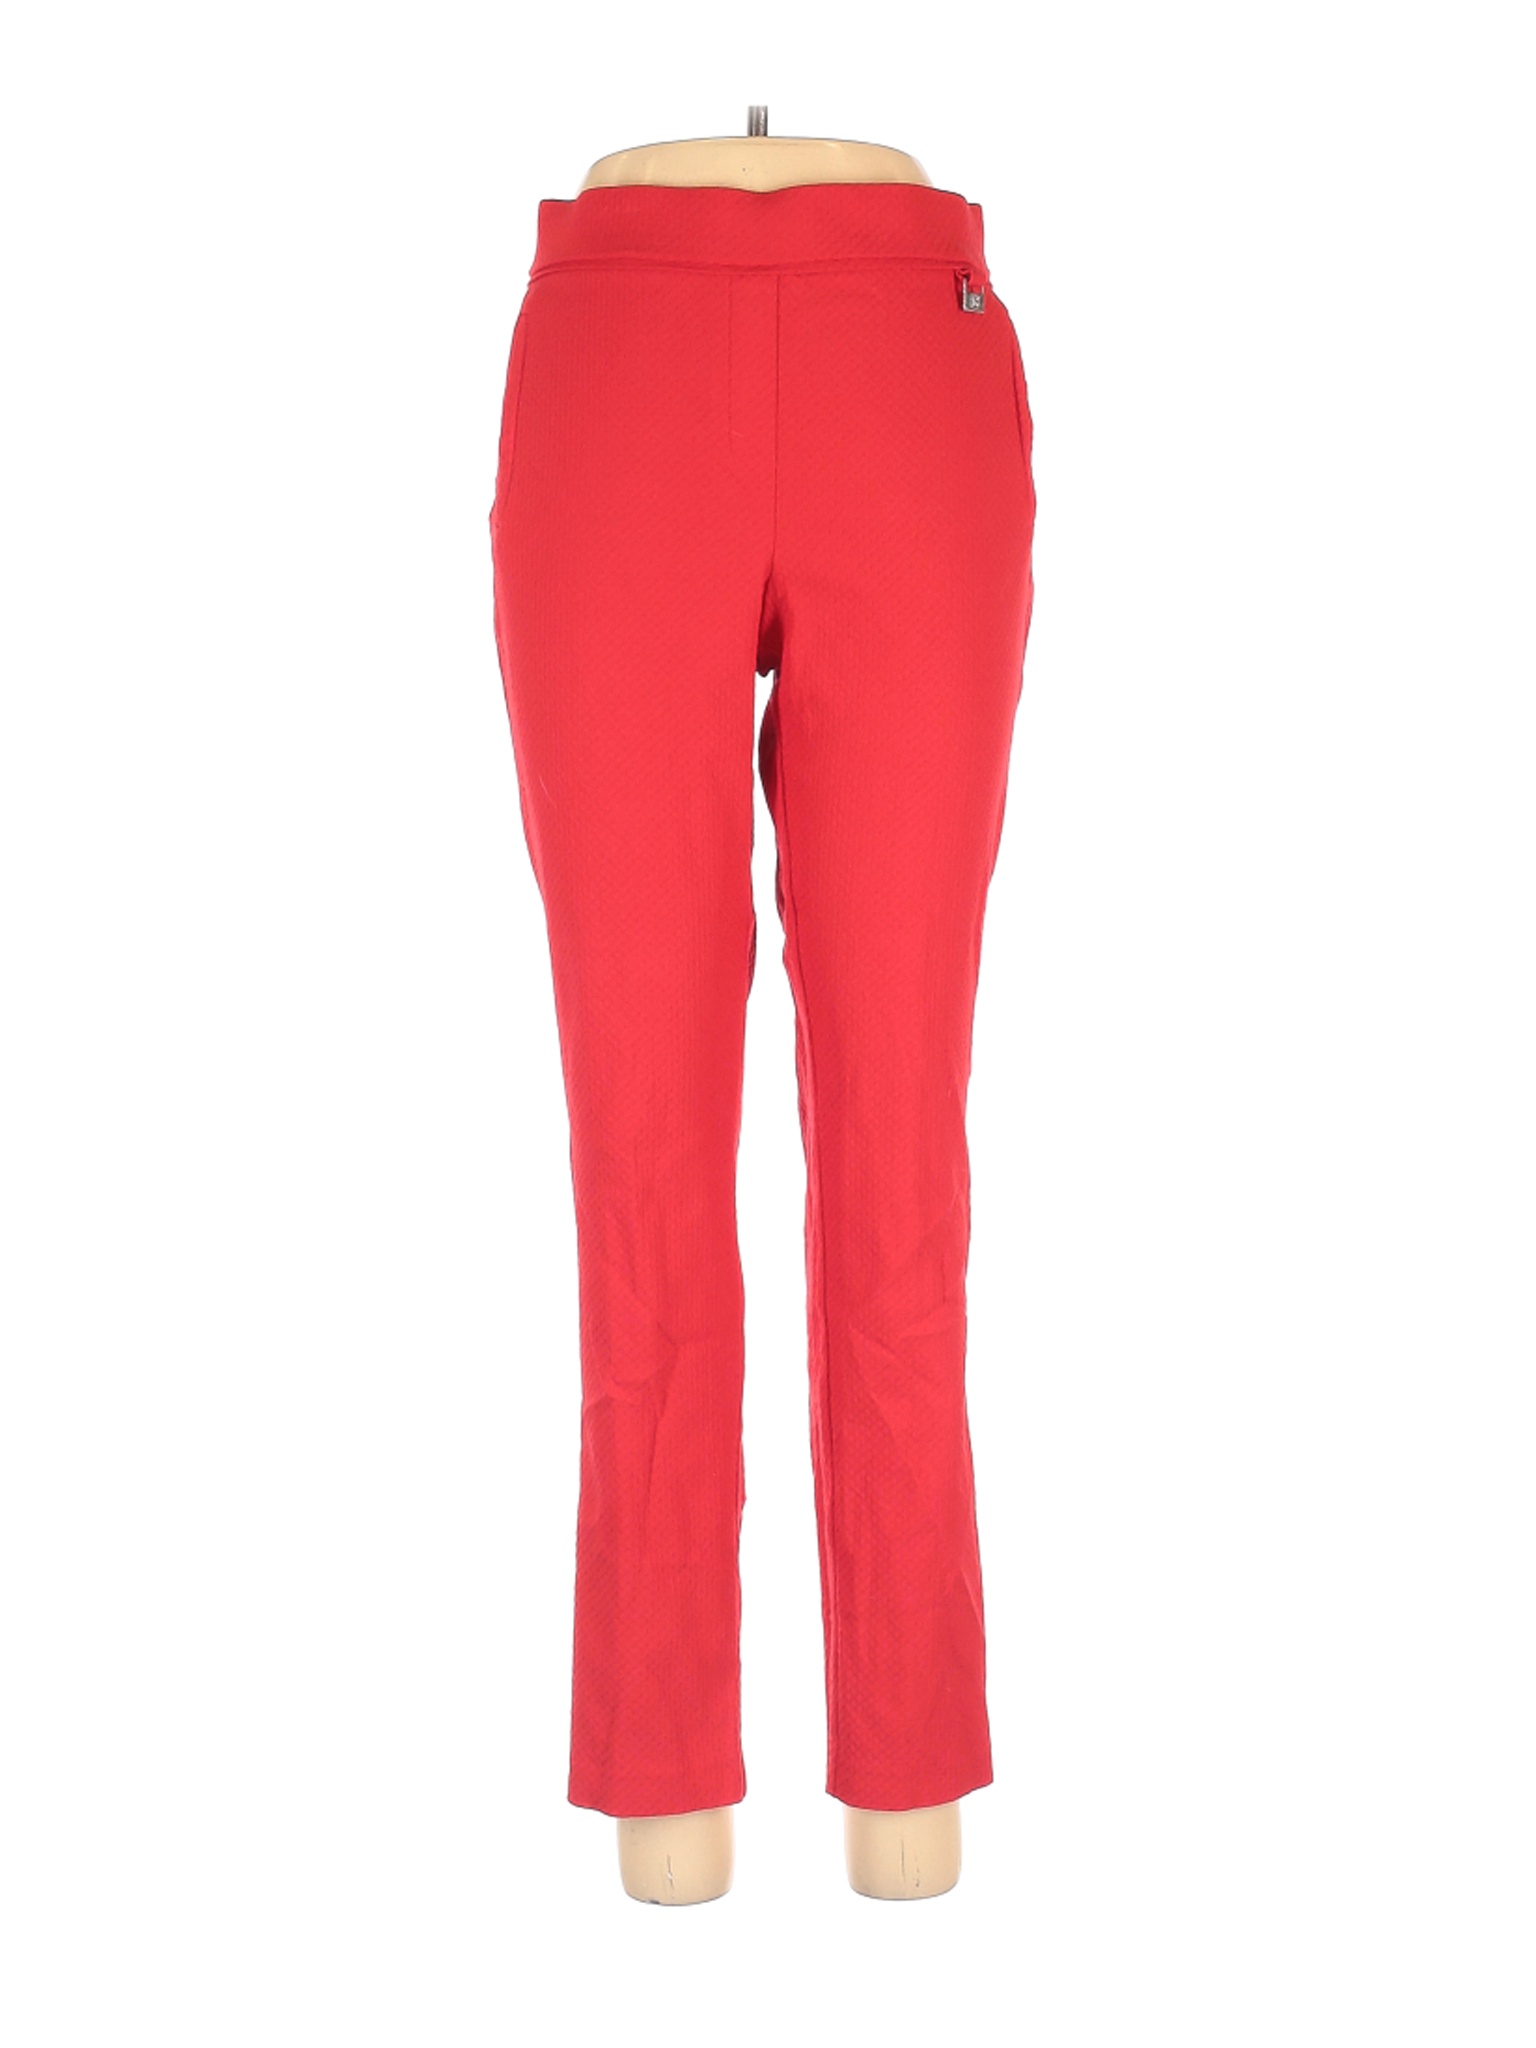 Rafaella Women Red Casual Pants 6 | eBay